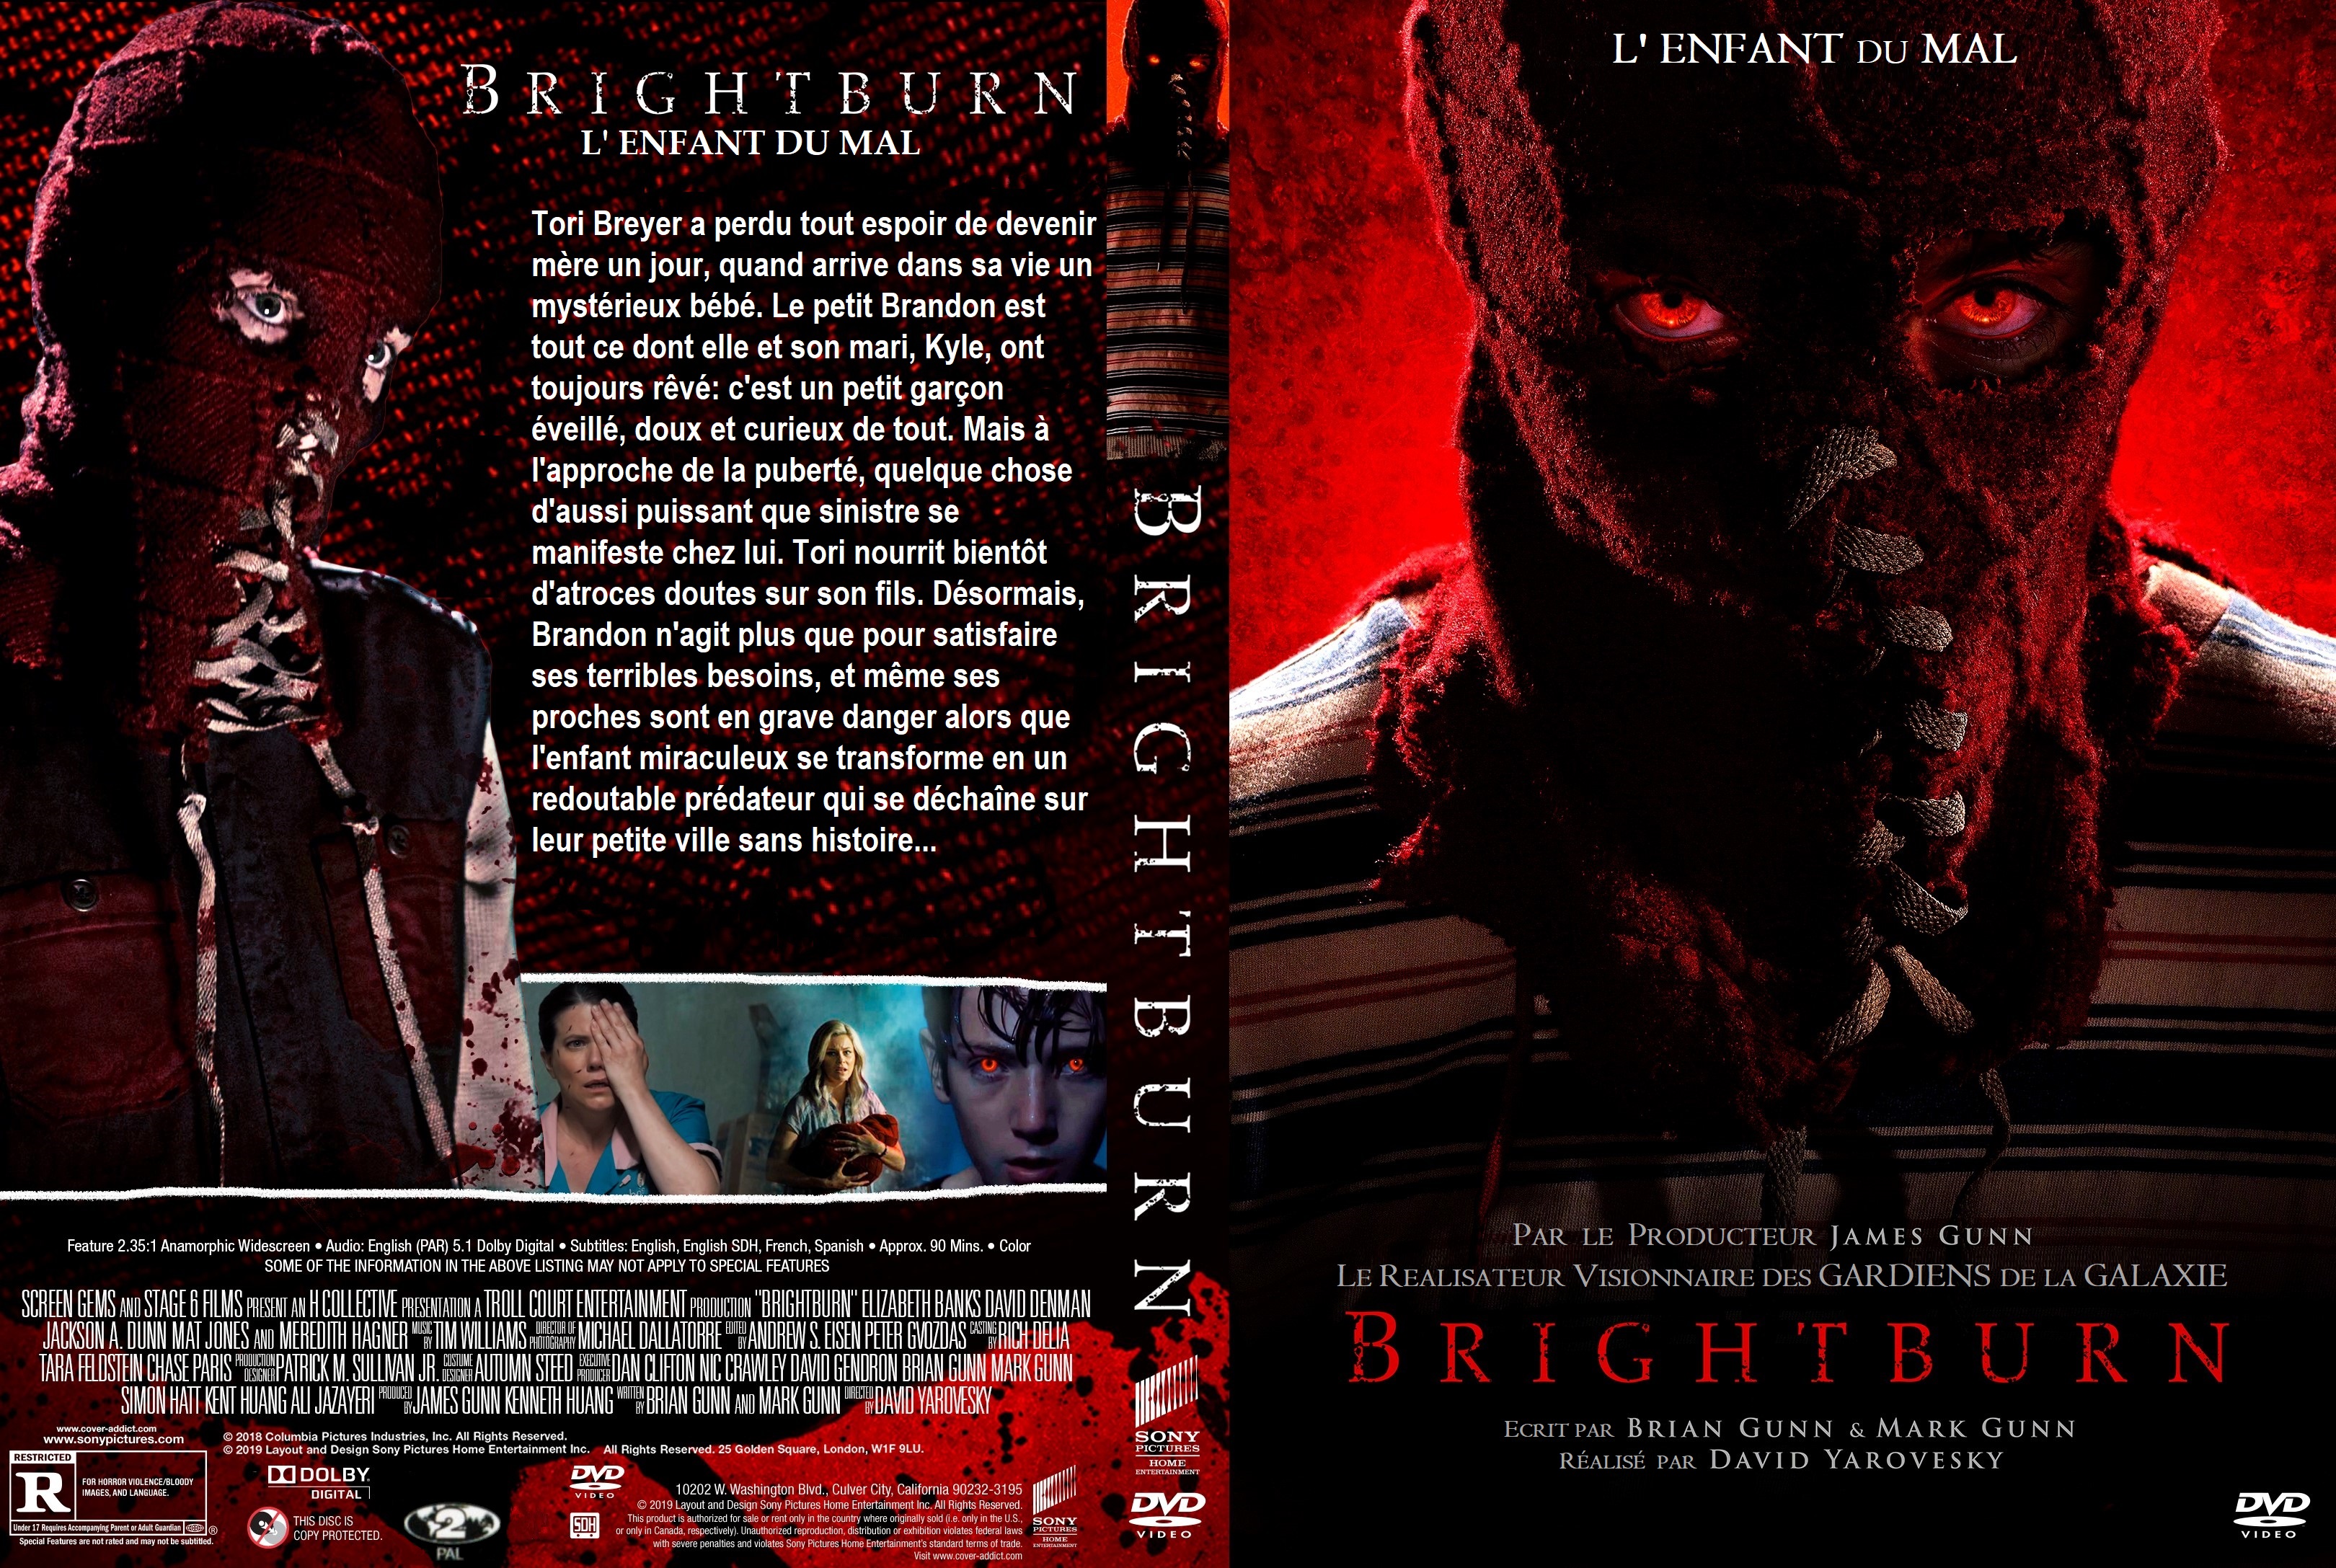 Jaquette DVD Brightburn custom